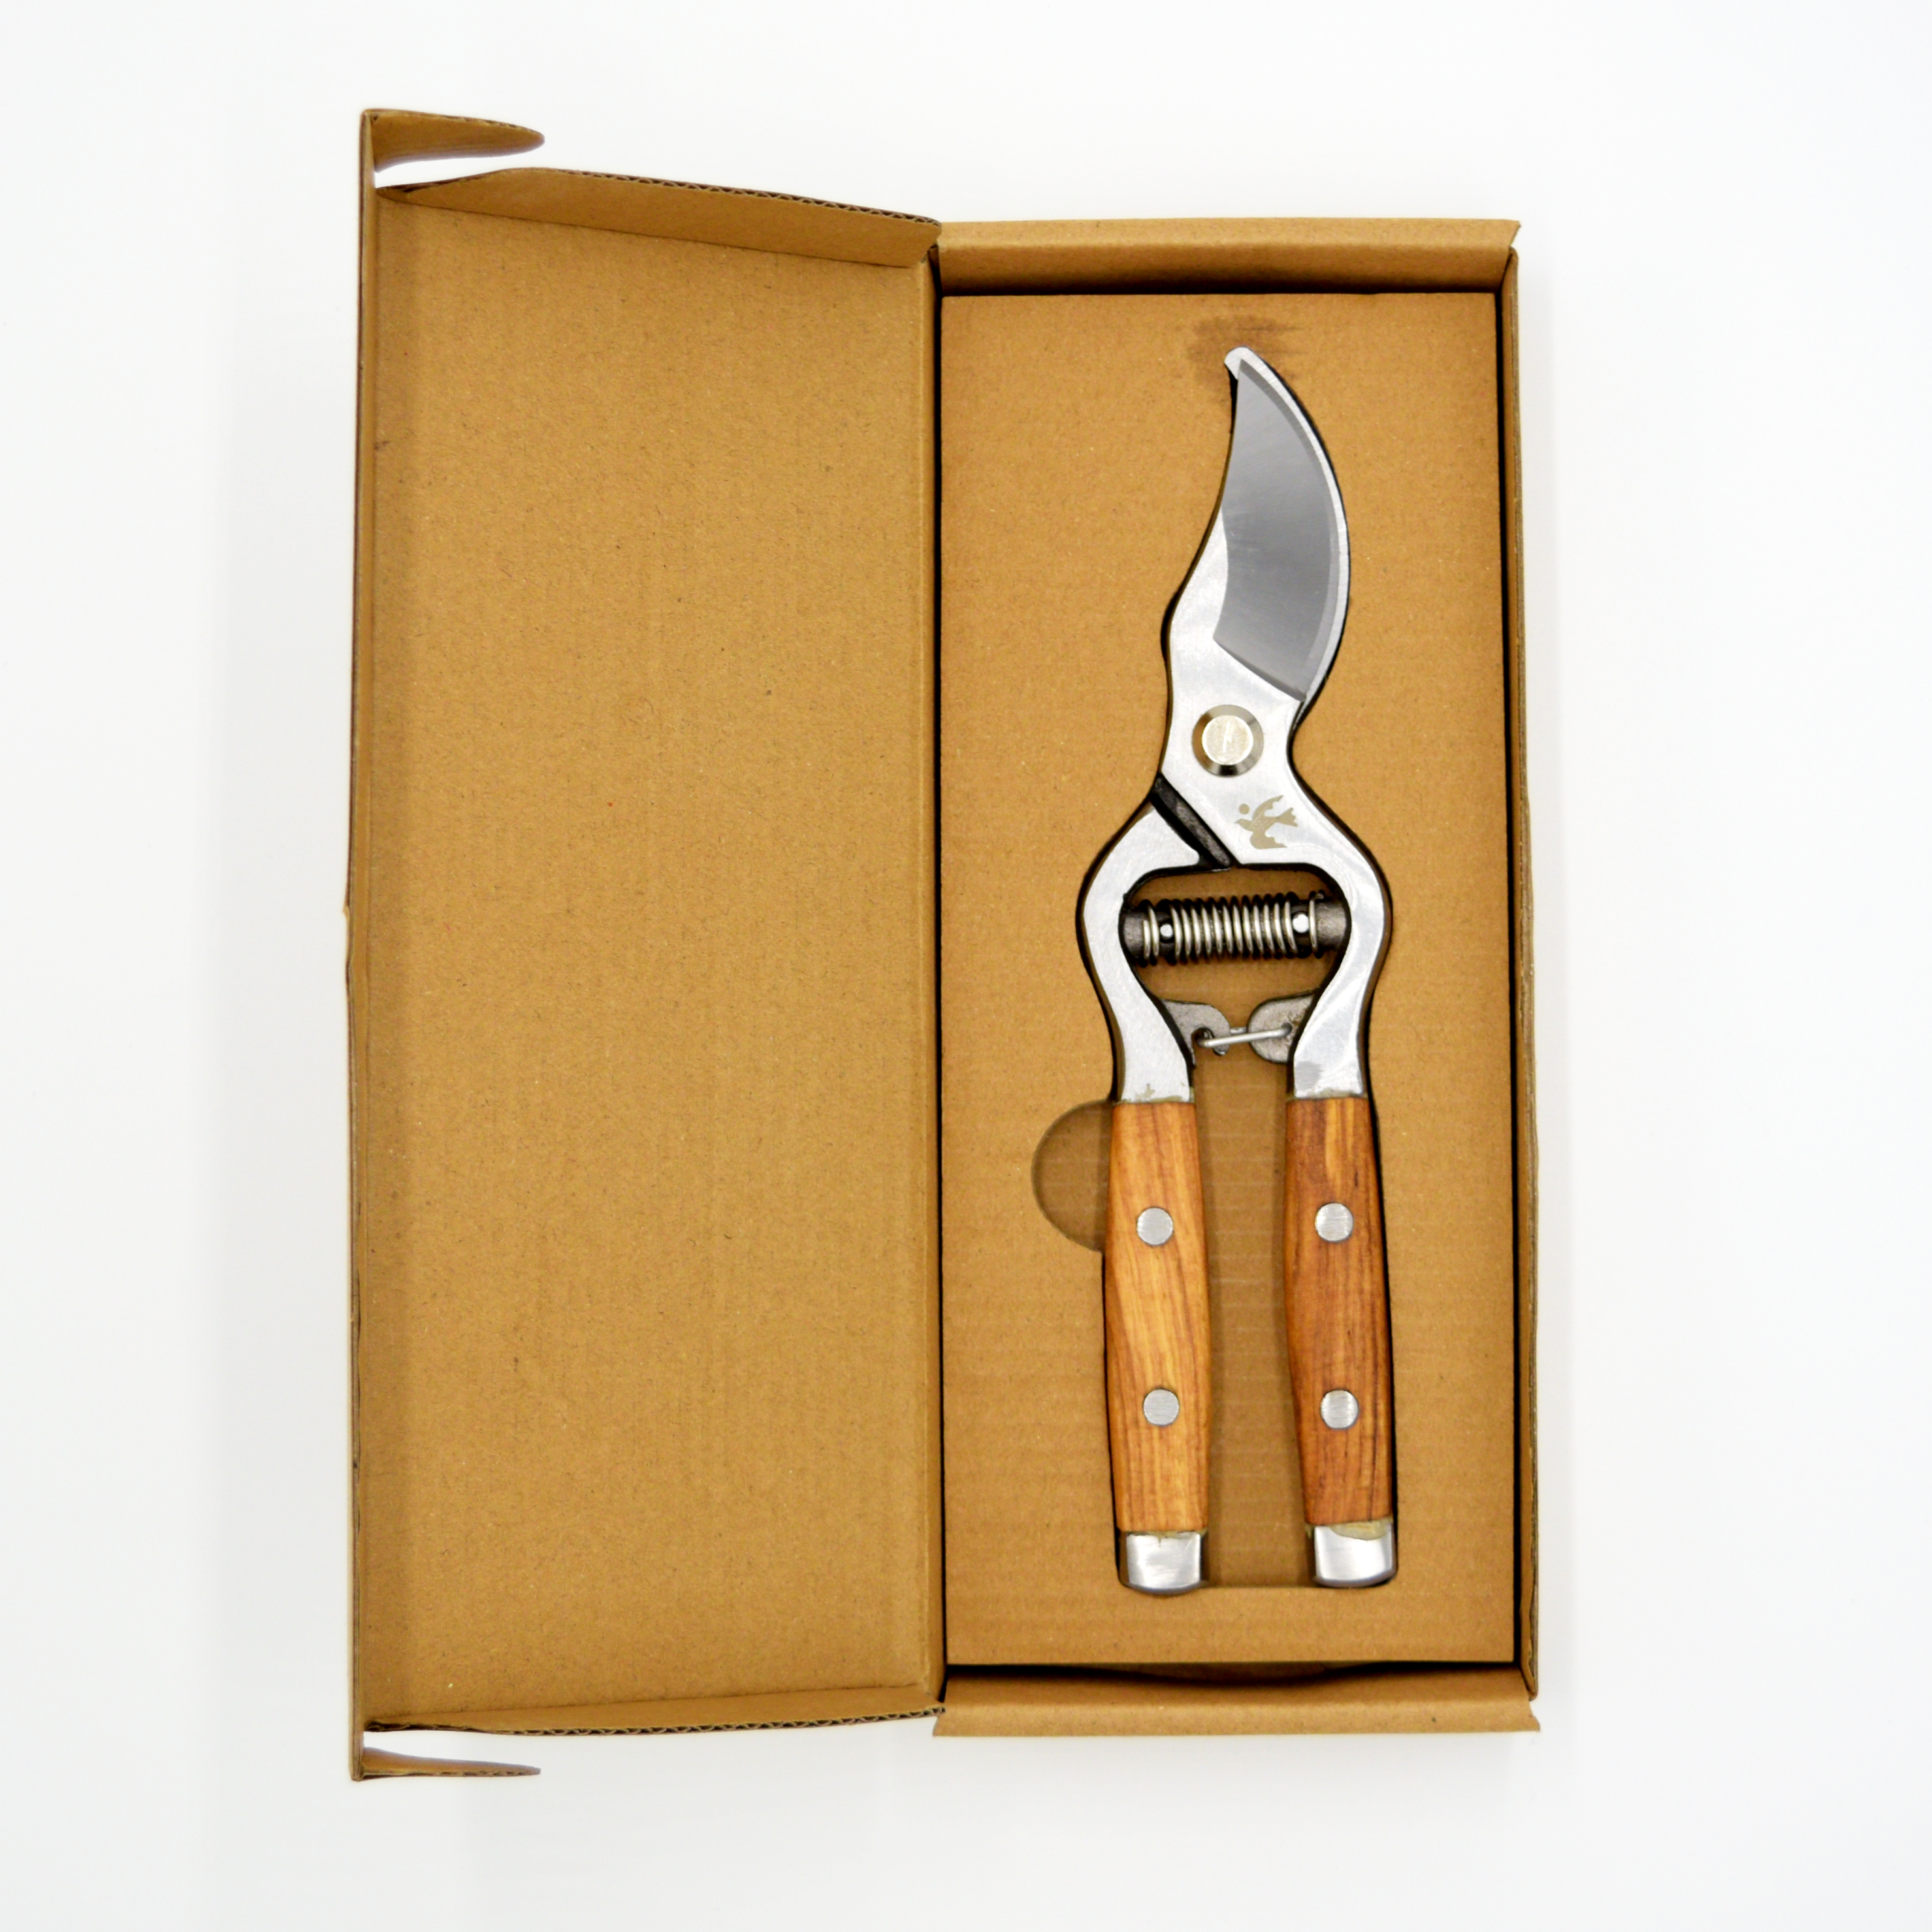 Secateurs wood handle gift box